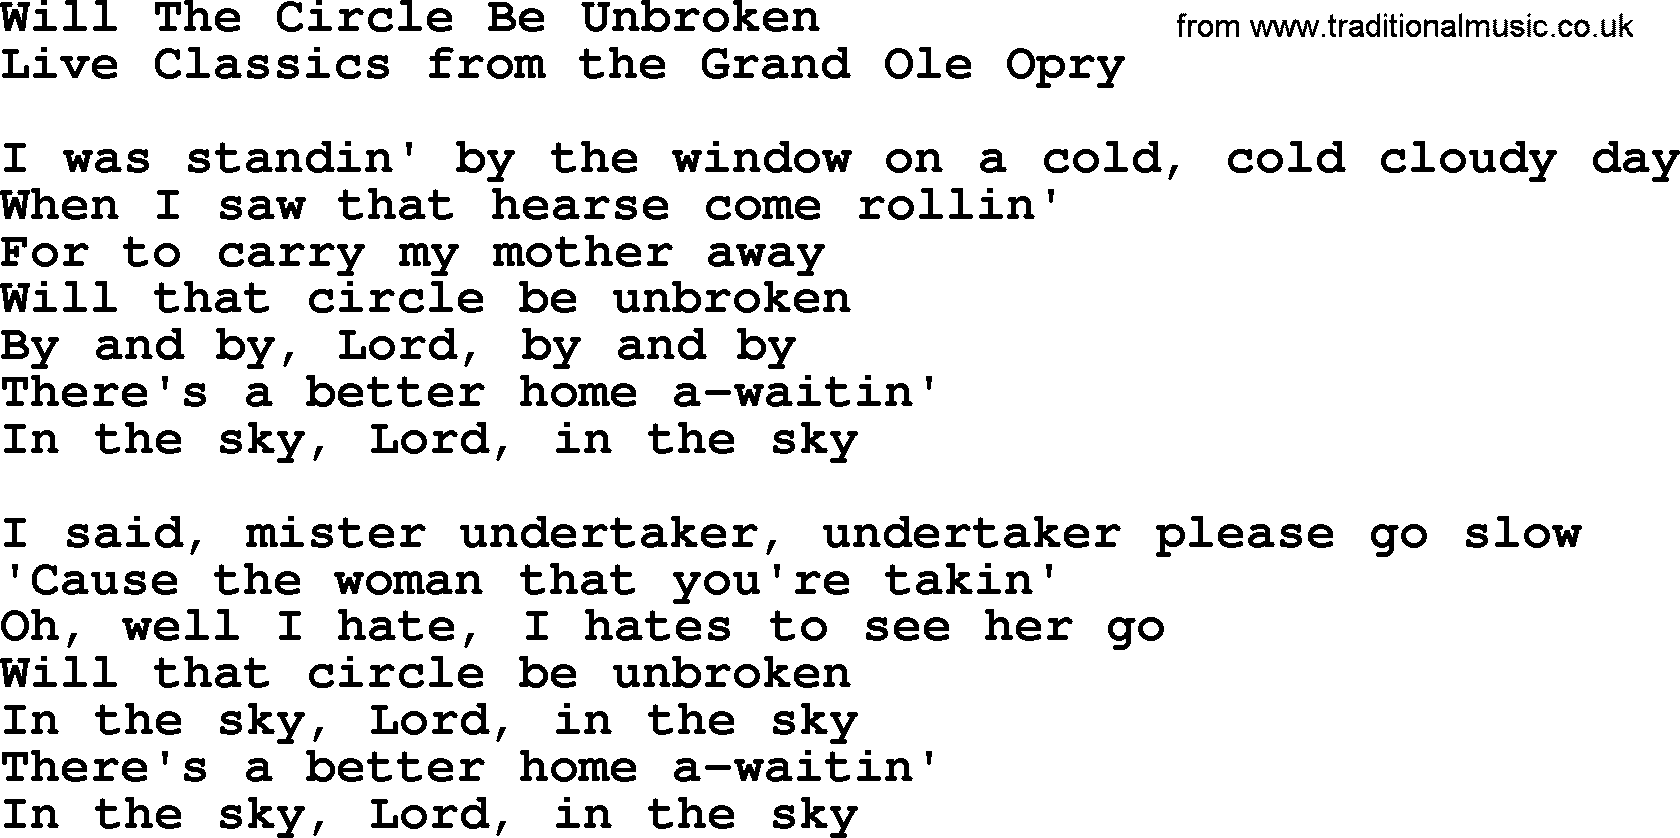 Marty Robbins song: Will The Circle Be Unbroken, lyrics